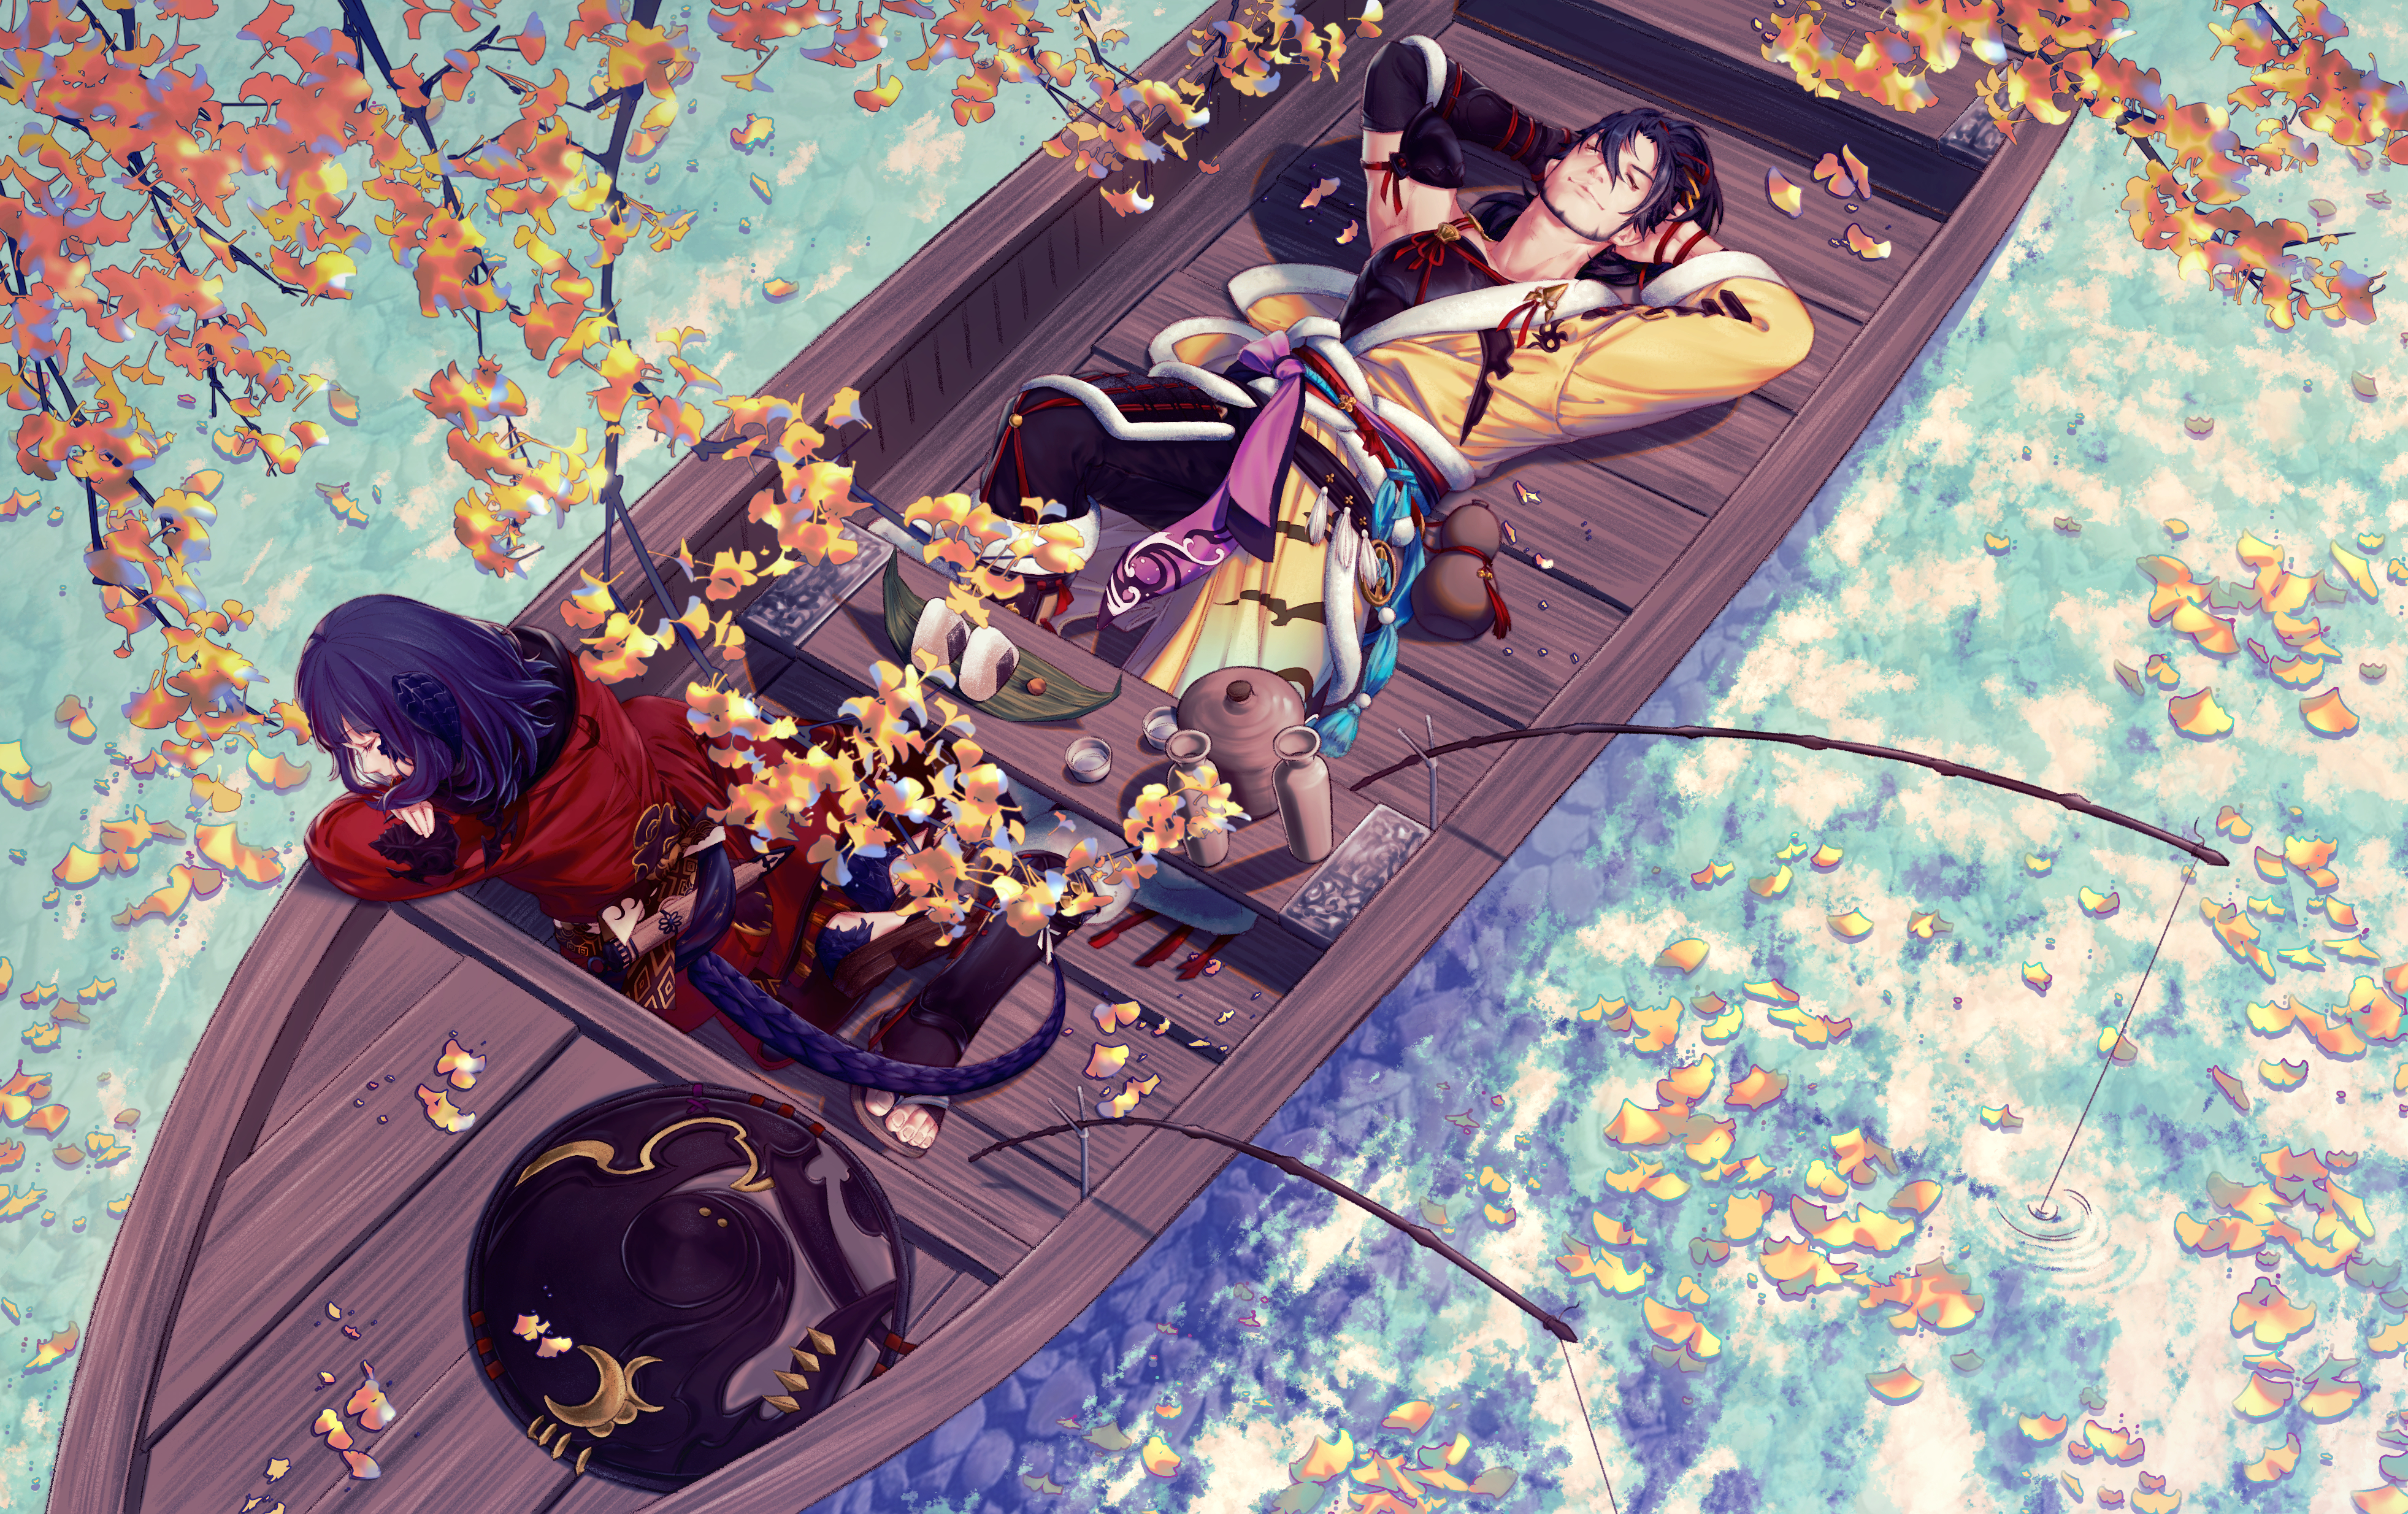 Video Game Final Fantasy XIV HD Wallpaper | Background Image